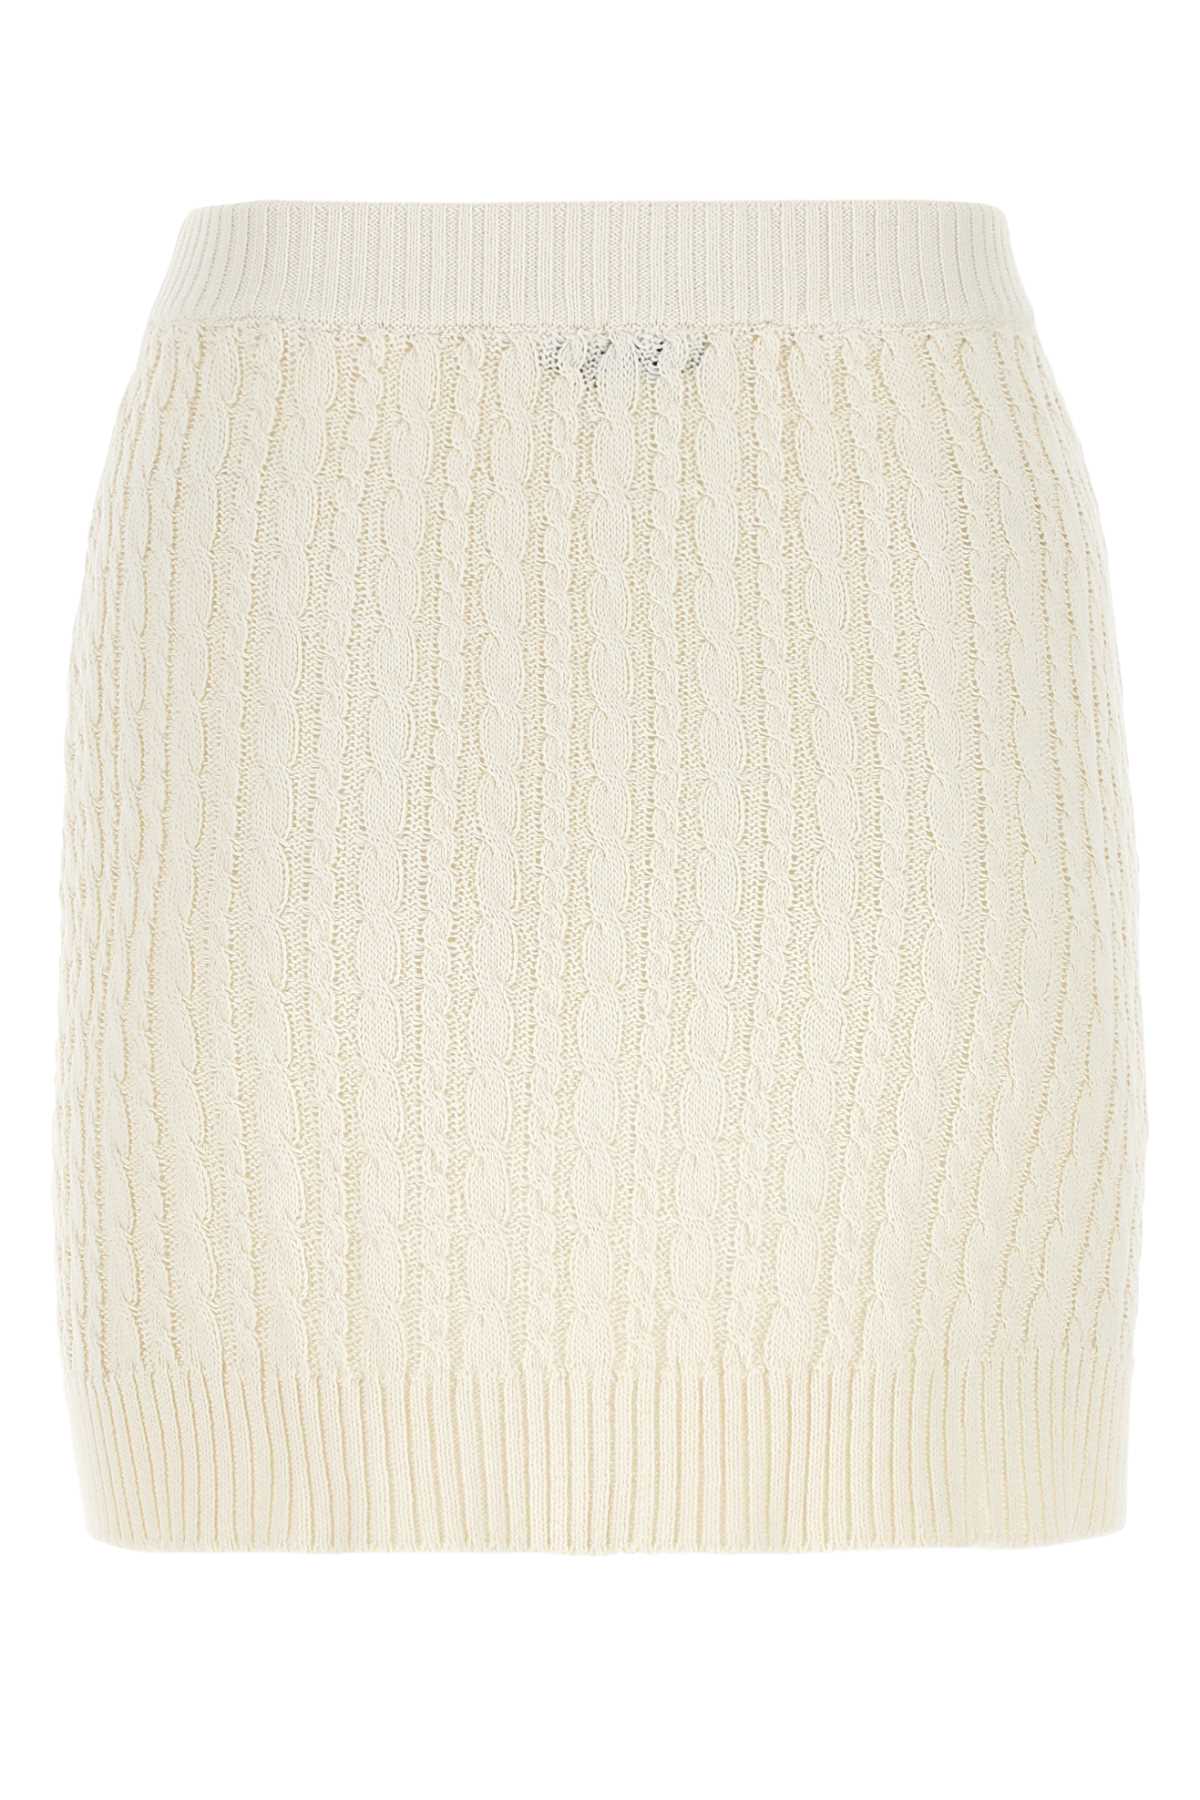 Prada Ivory Cotton Blend Mini Skirt In Beige